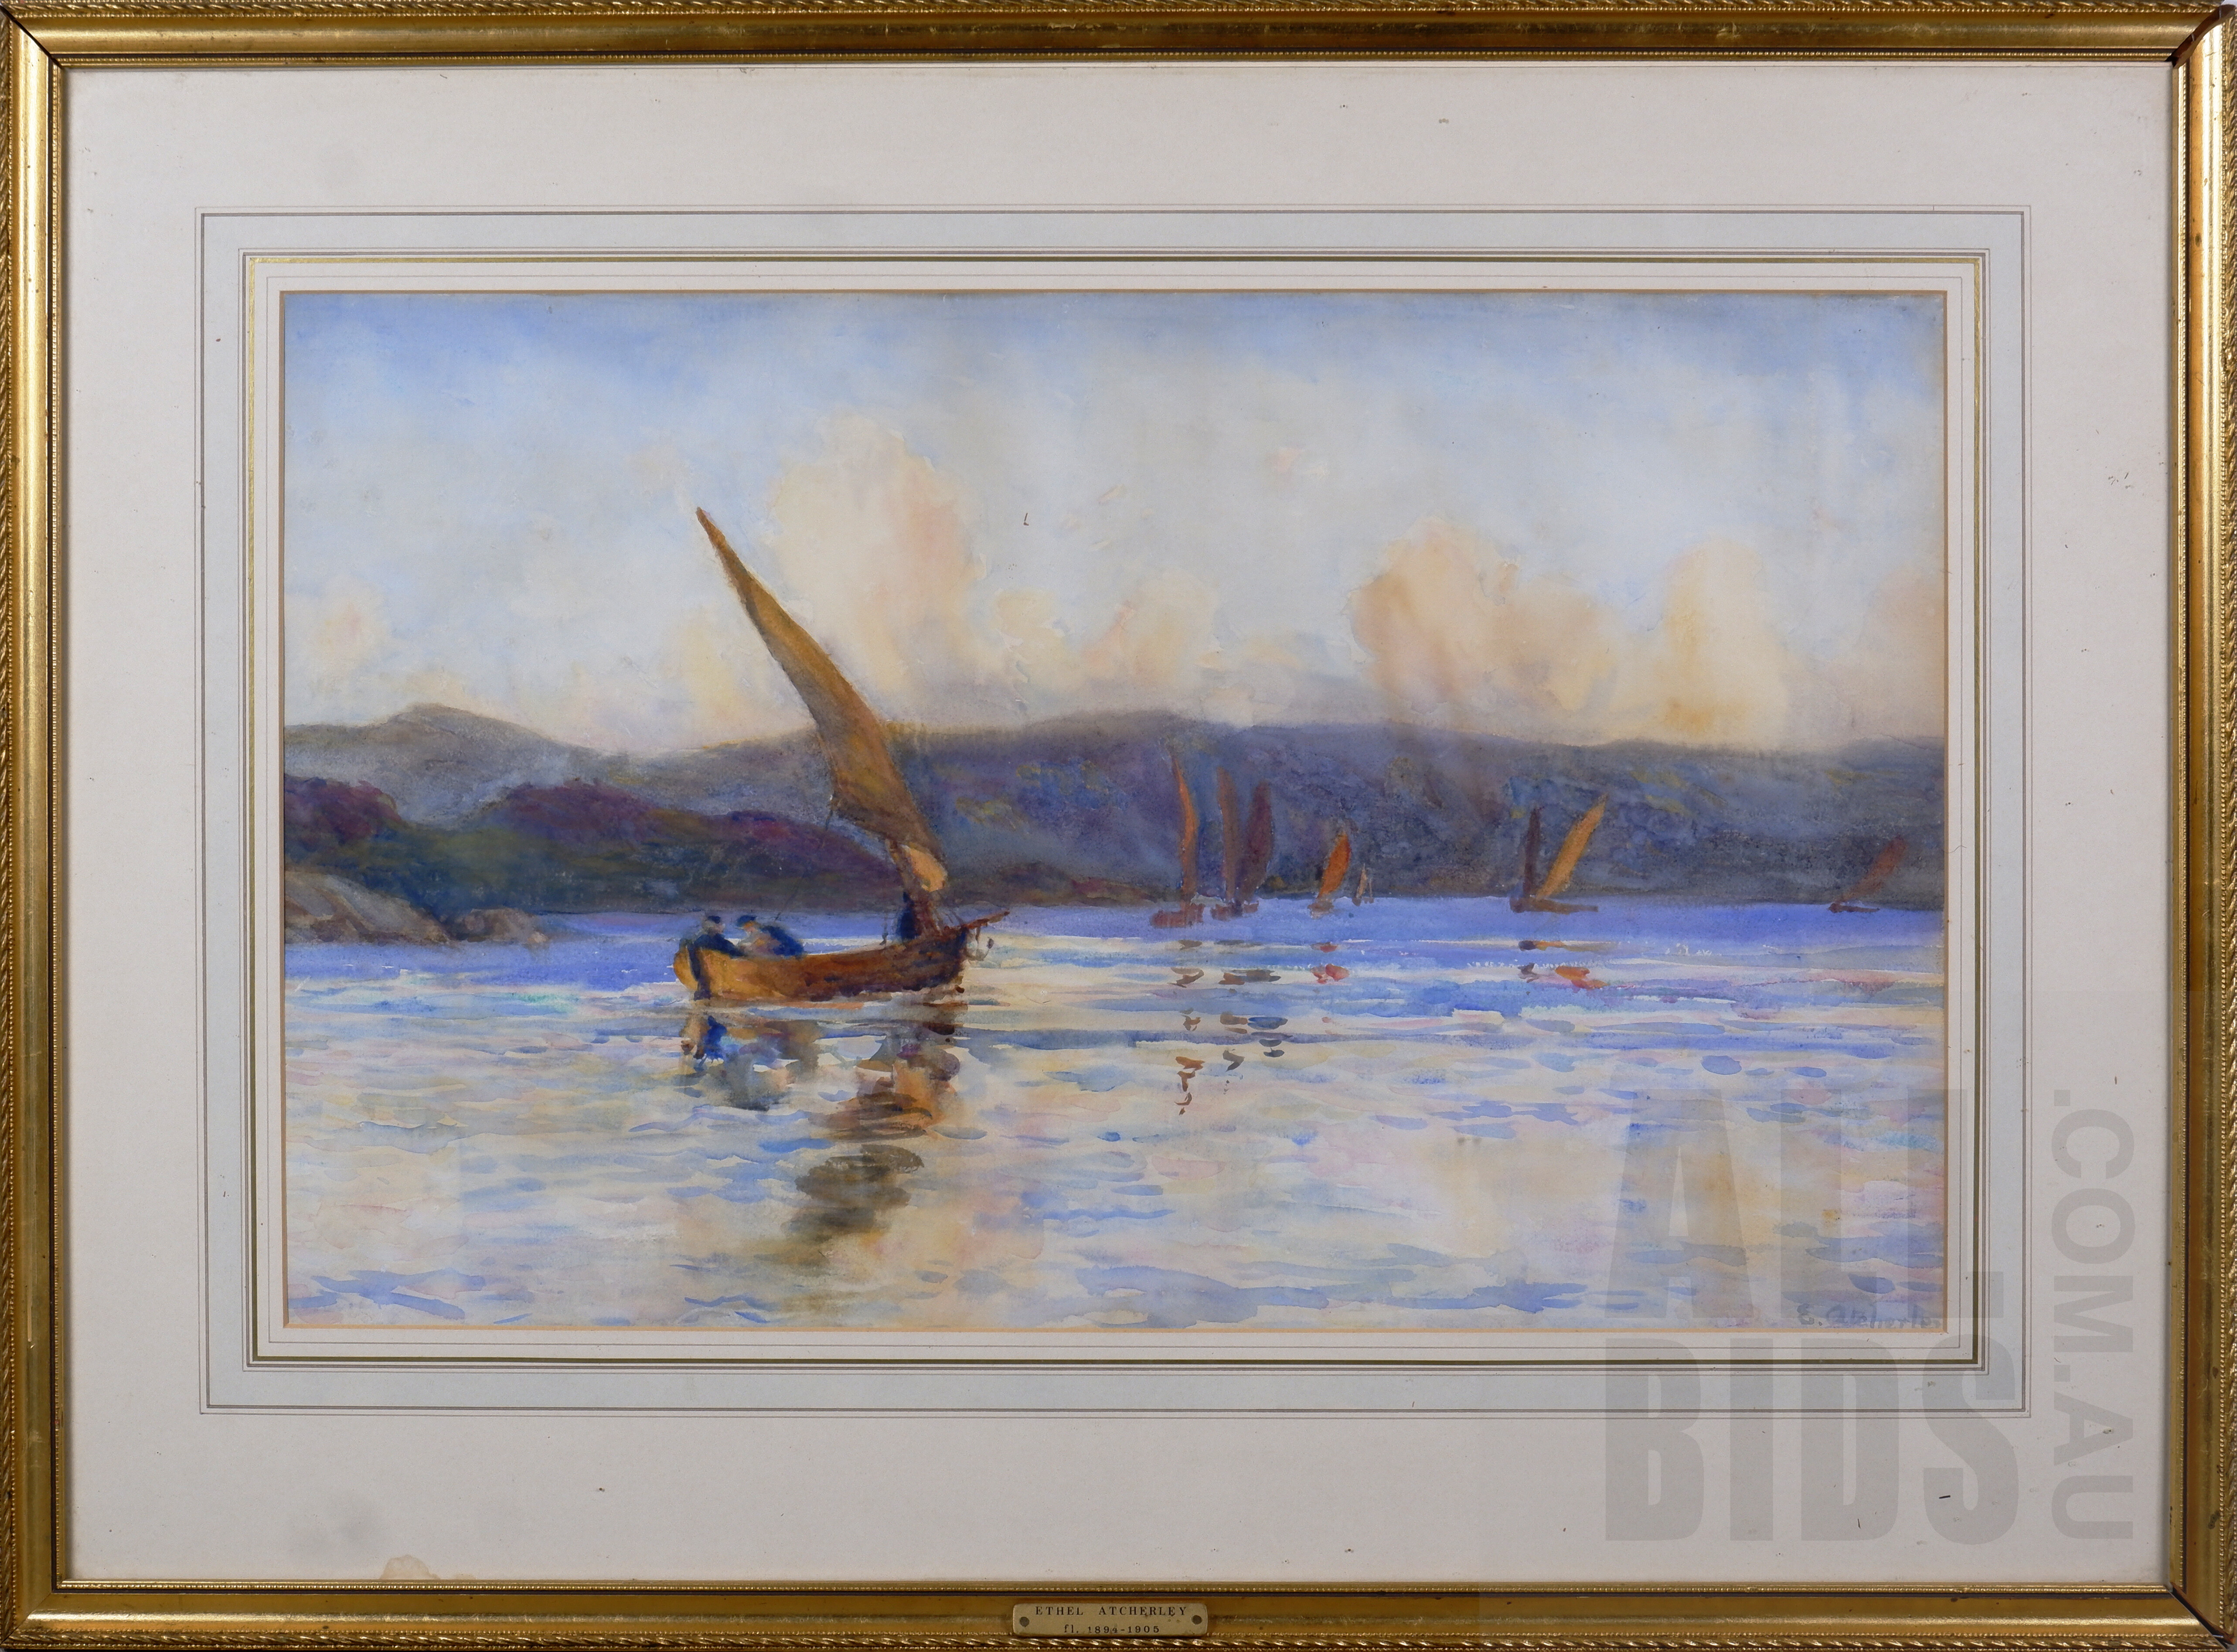 'Ethel Atcherley (1894-1905), Fisherman on the Water, Watercolour, 37 x 54 cm'